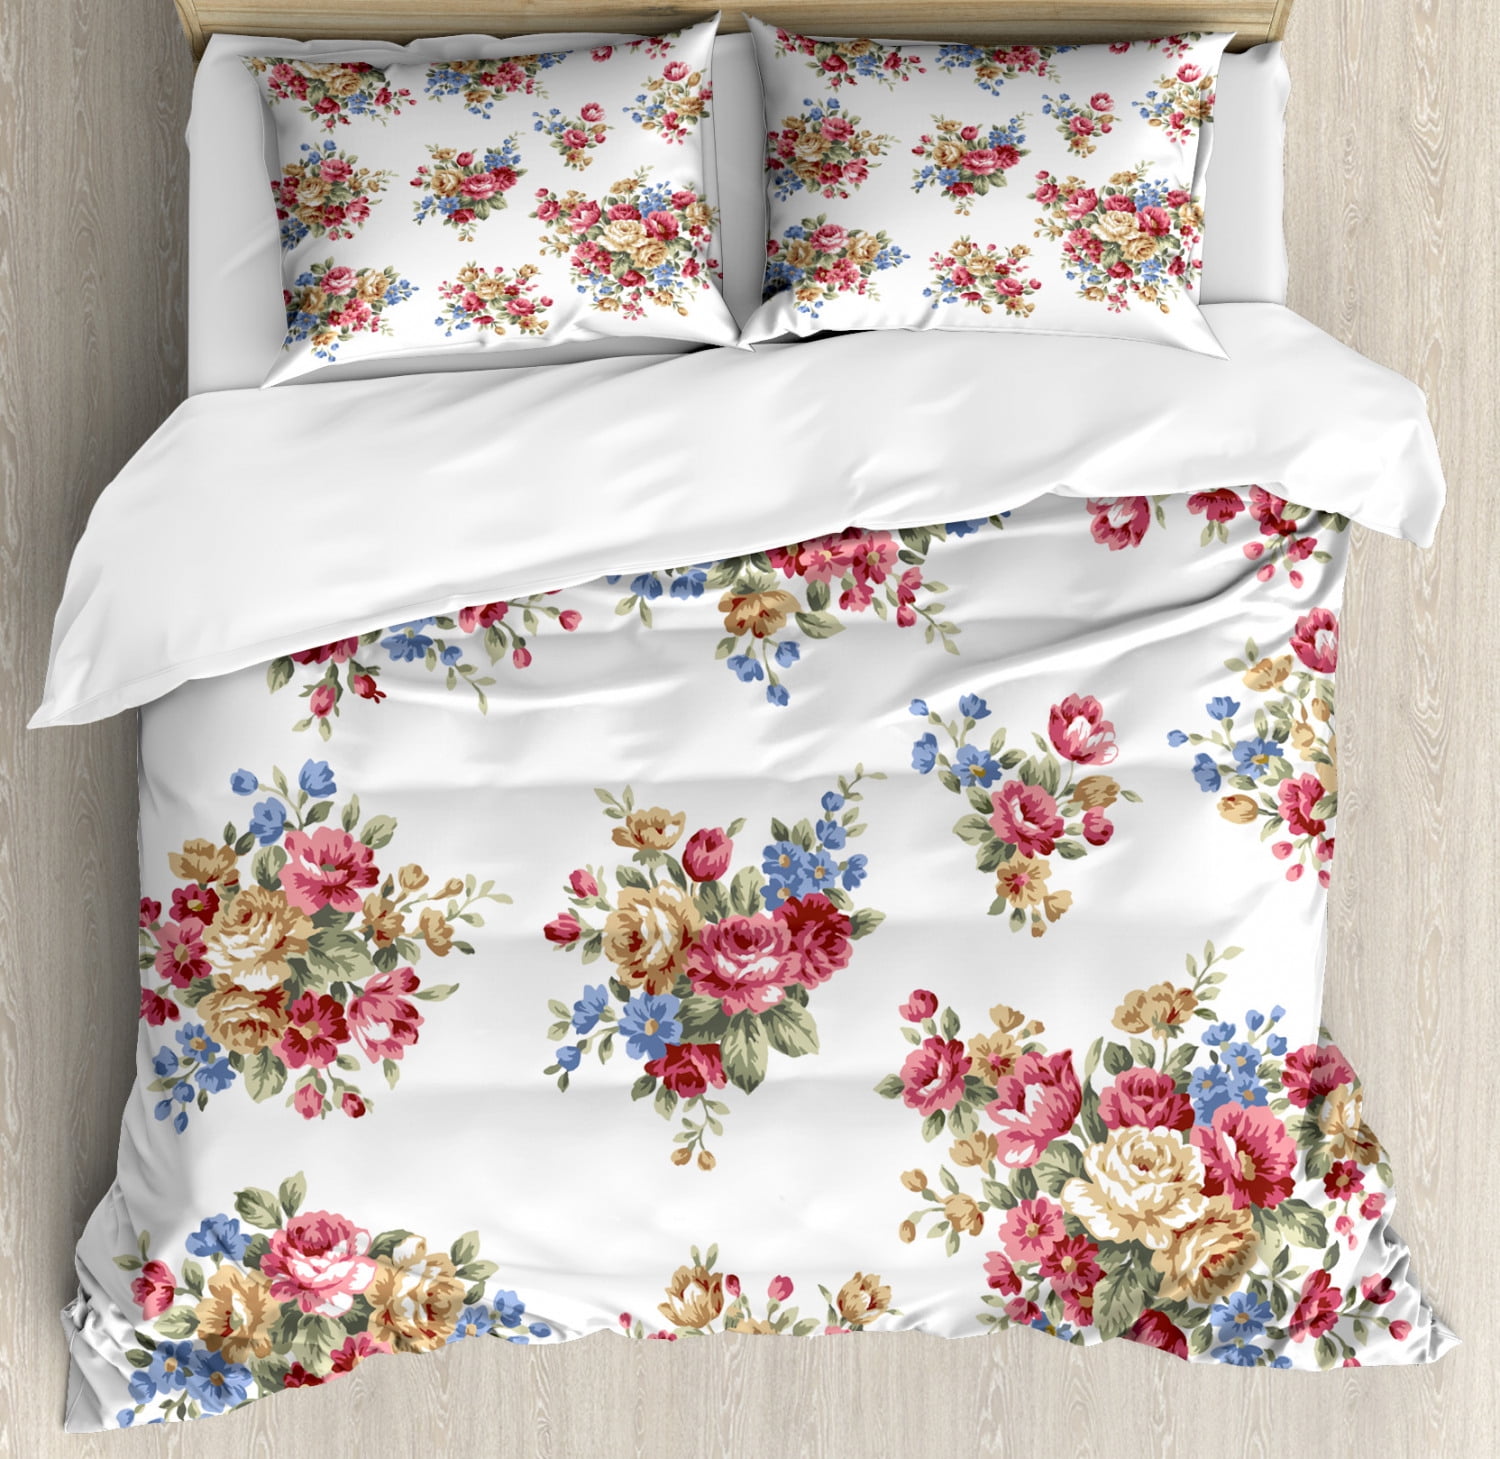 Details about   3D Floral King Size Duvet Cover Sheet Pillowcase Romantic Red Rose Bedding Set 